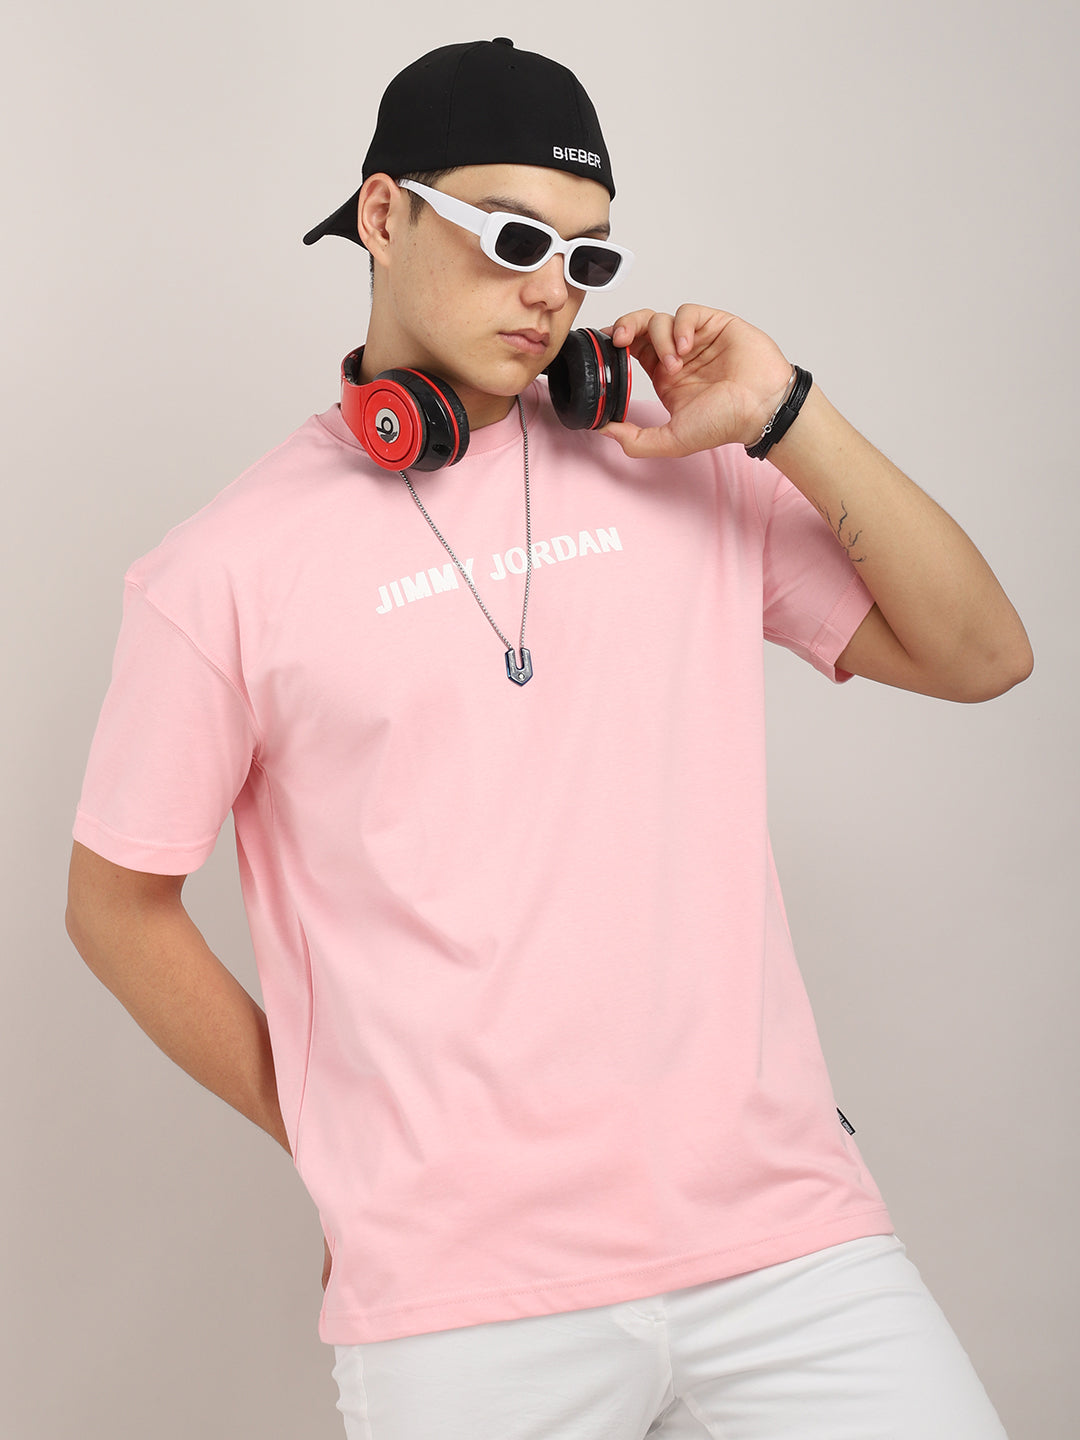 Good Oversized Pink T-Shirt